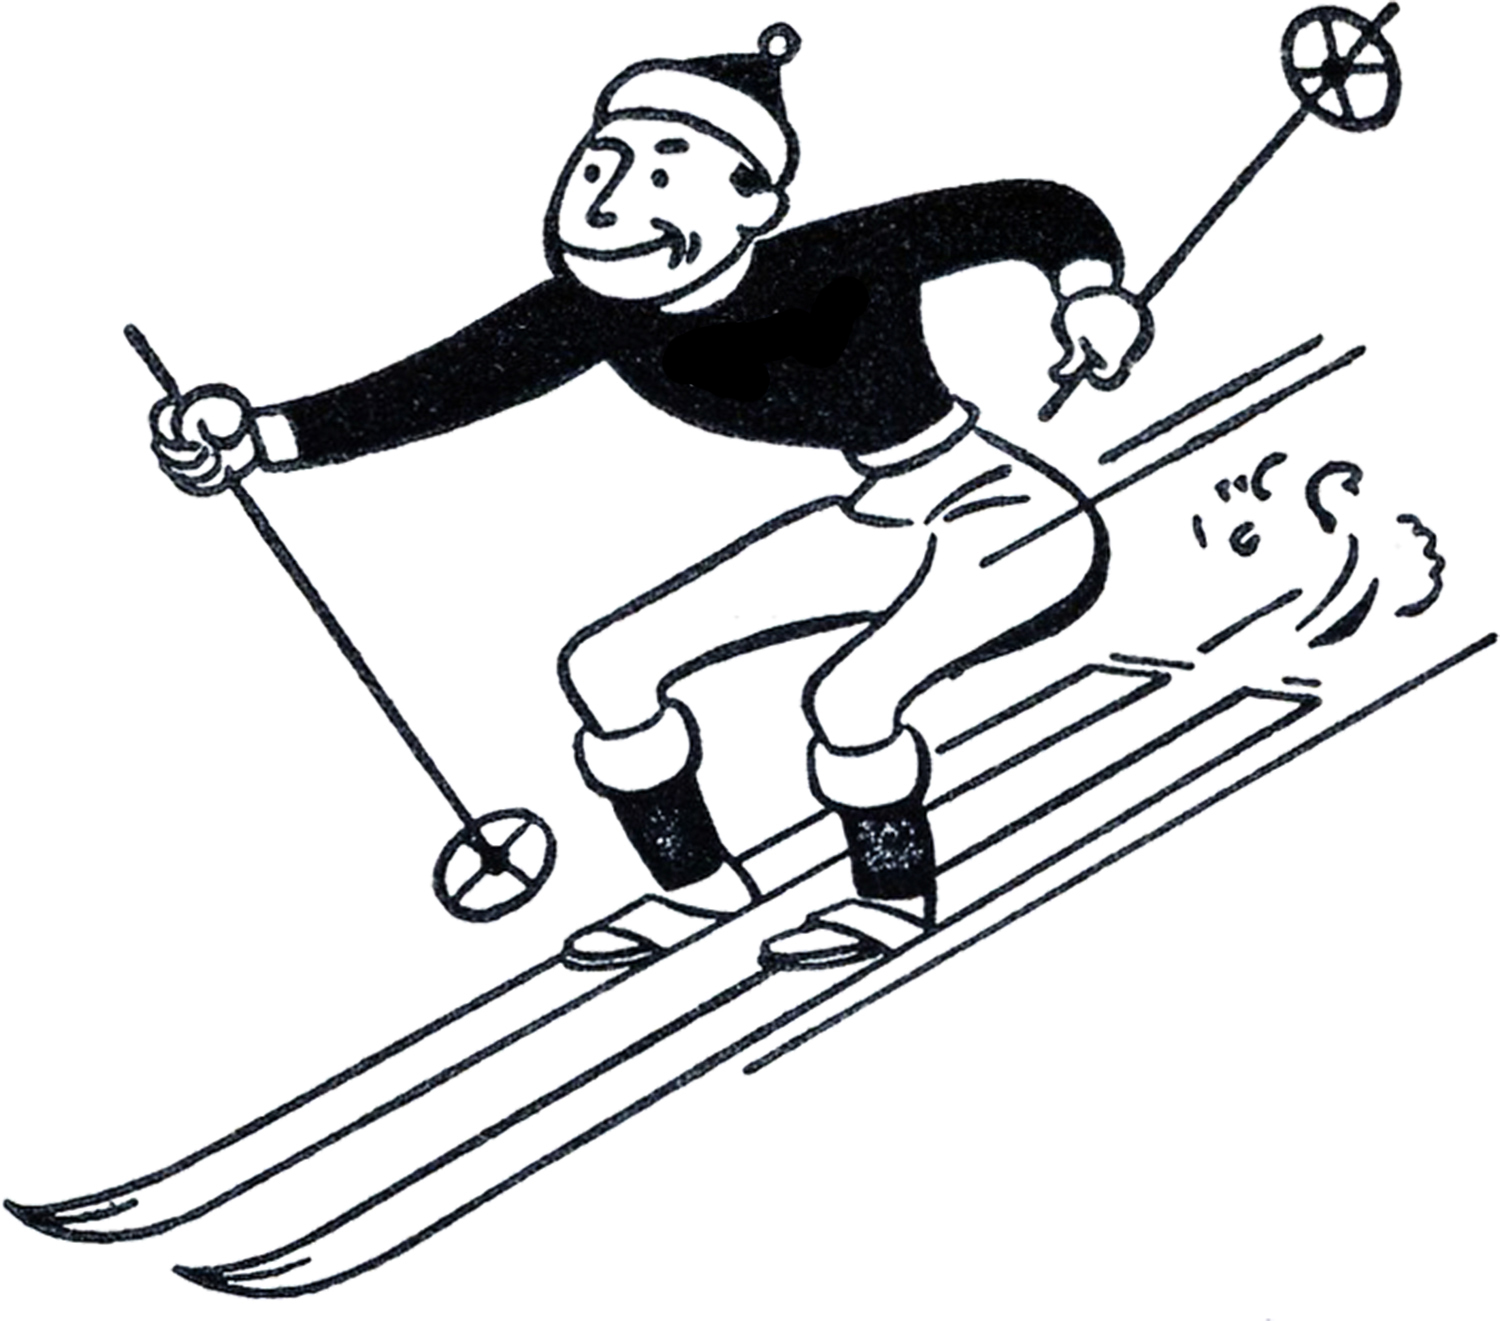 Downhill ski clipart - Clipar